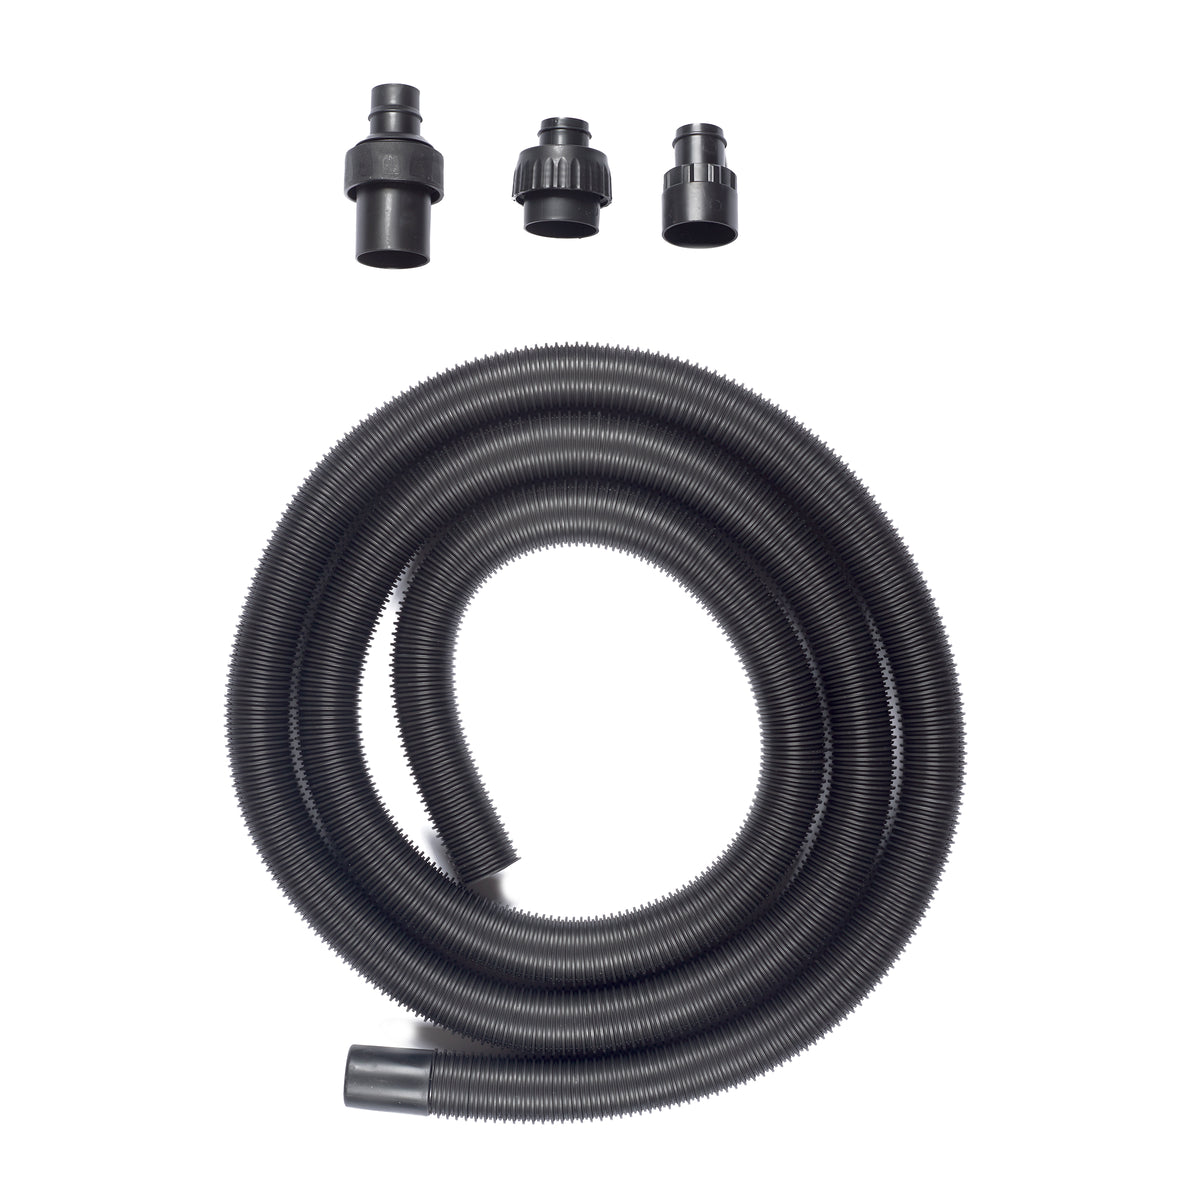 Shop Vac Black 1.25 x 8' Hose with Curved Hose End 9056500 – Vacuum Direct